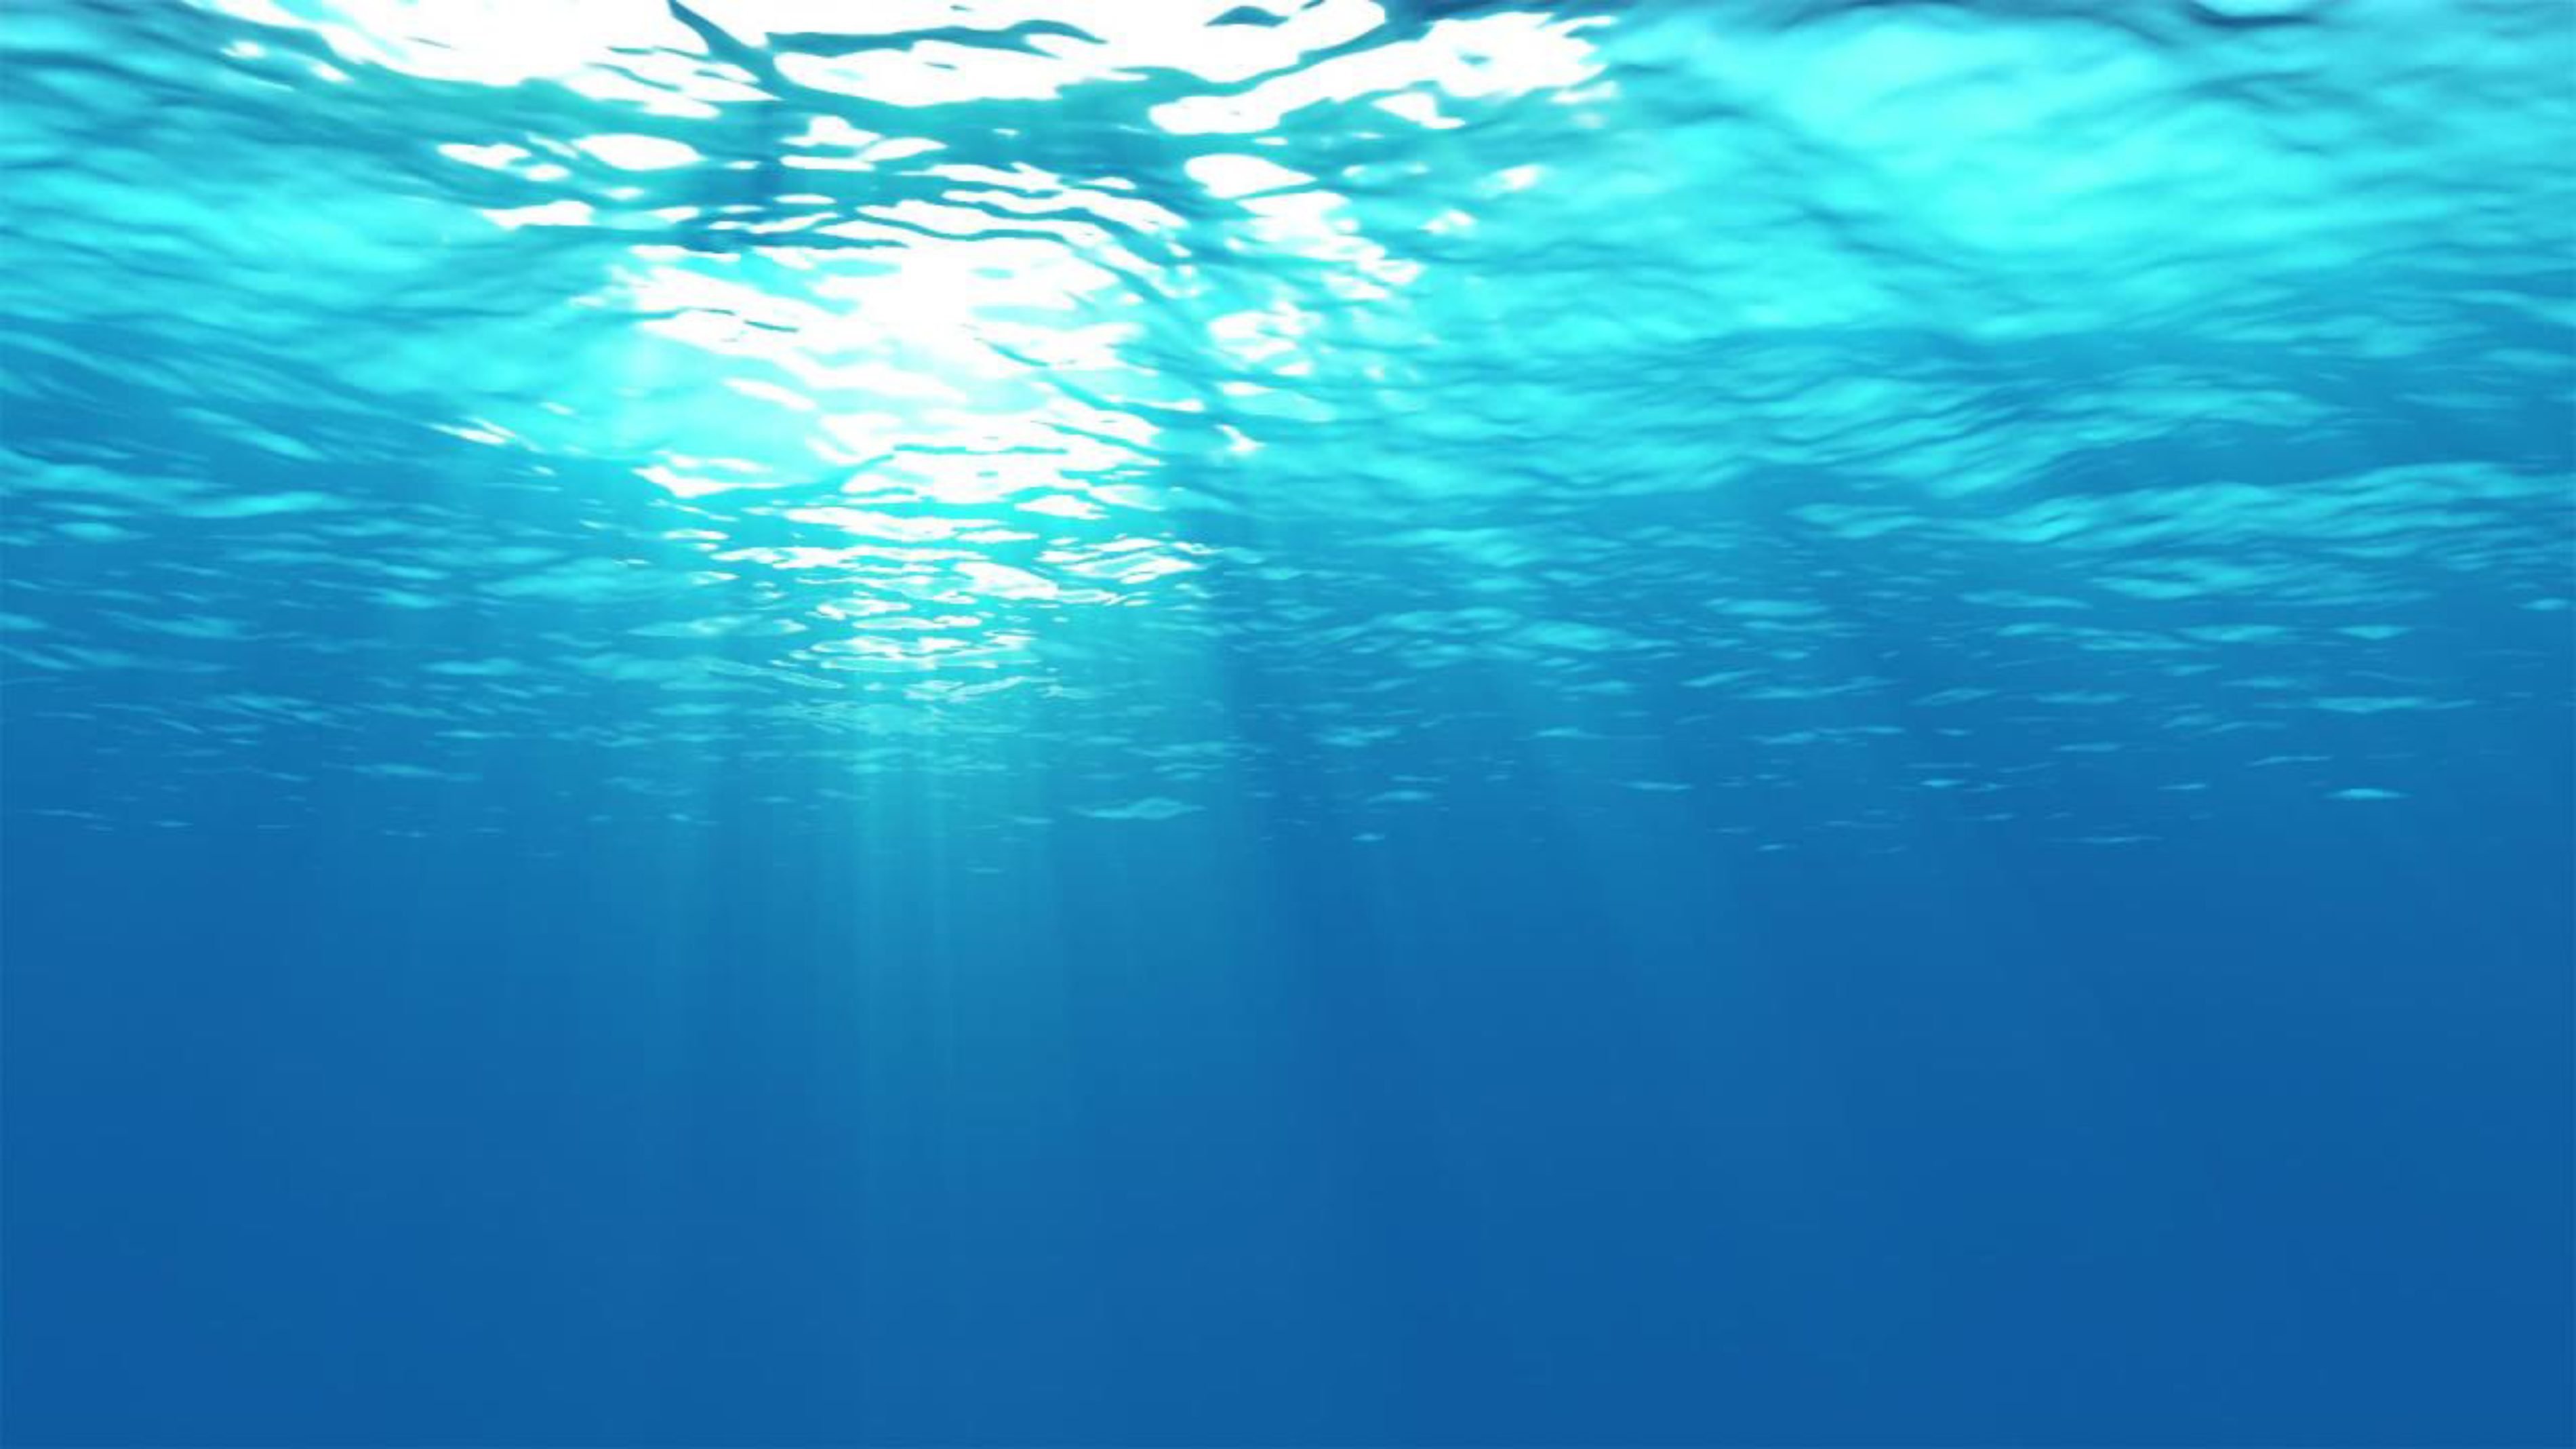 Into the water below. Океан под водой. Море под водой. Морские глубины. Океан внутри.